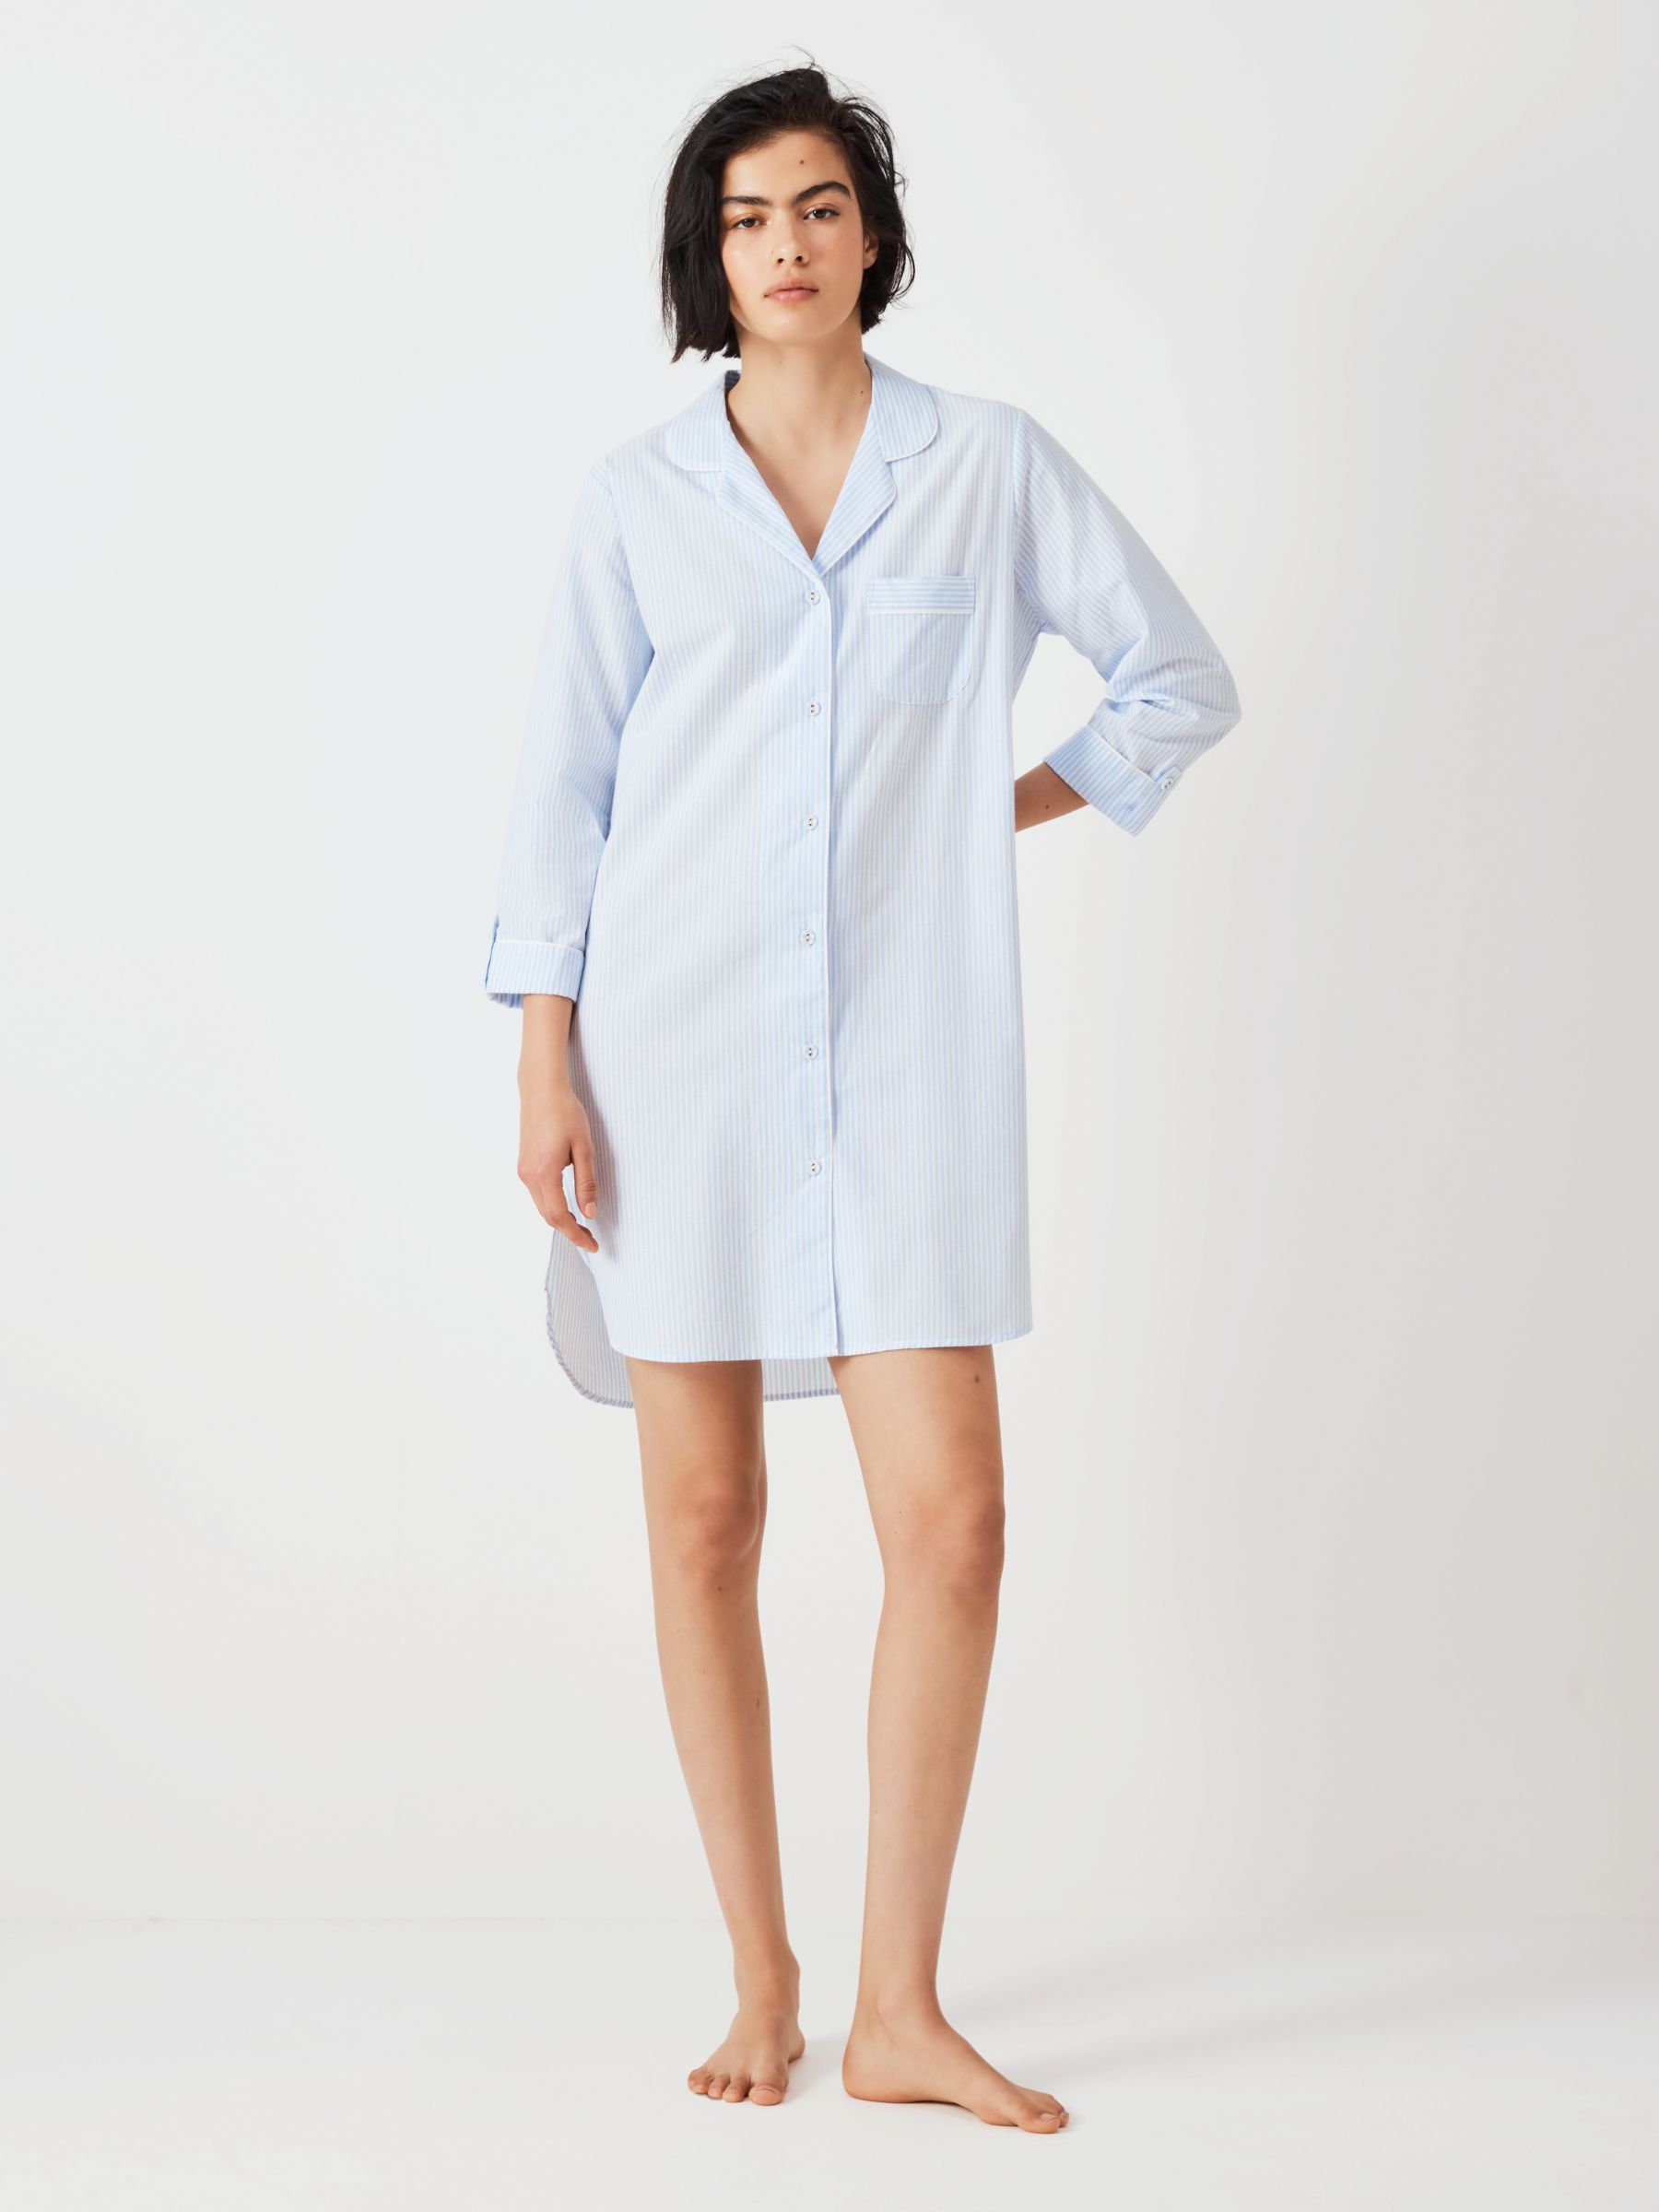 Sleep Shirts For Women Short Sleeve Cotton Novelty Night Shirts V Neck Over